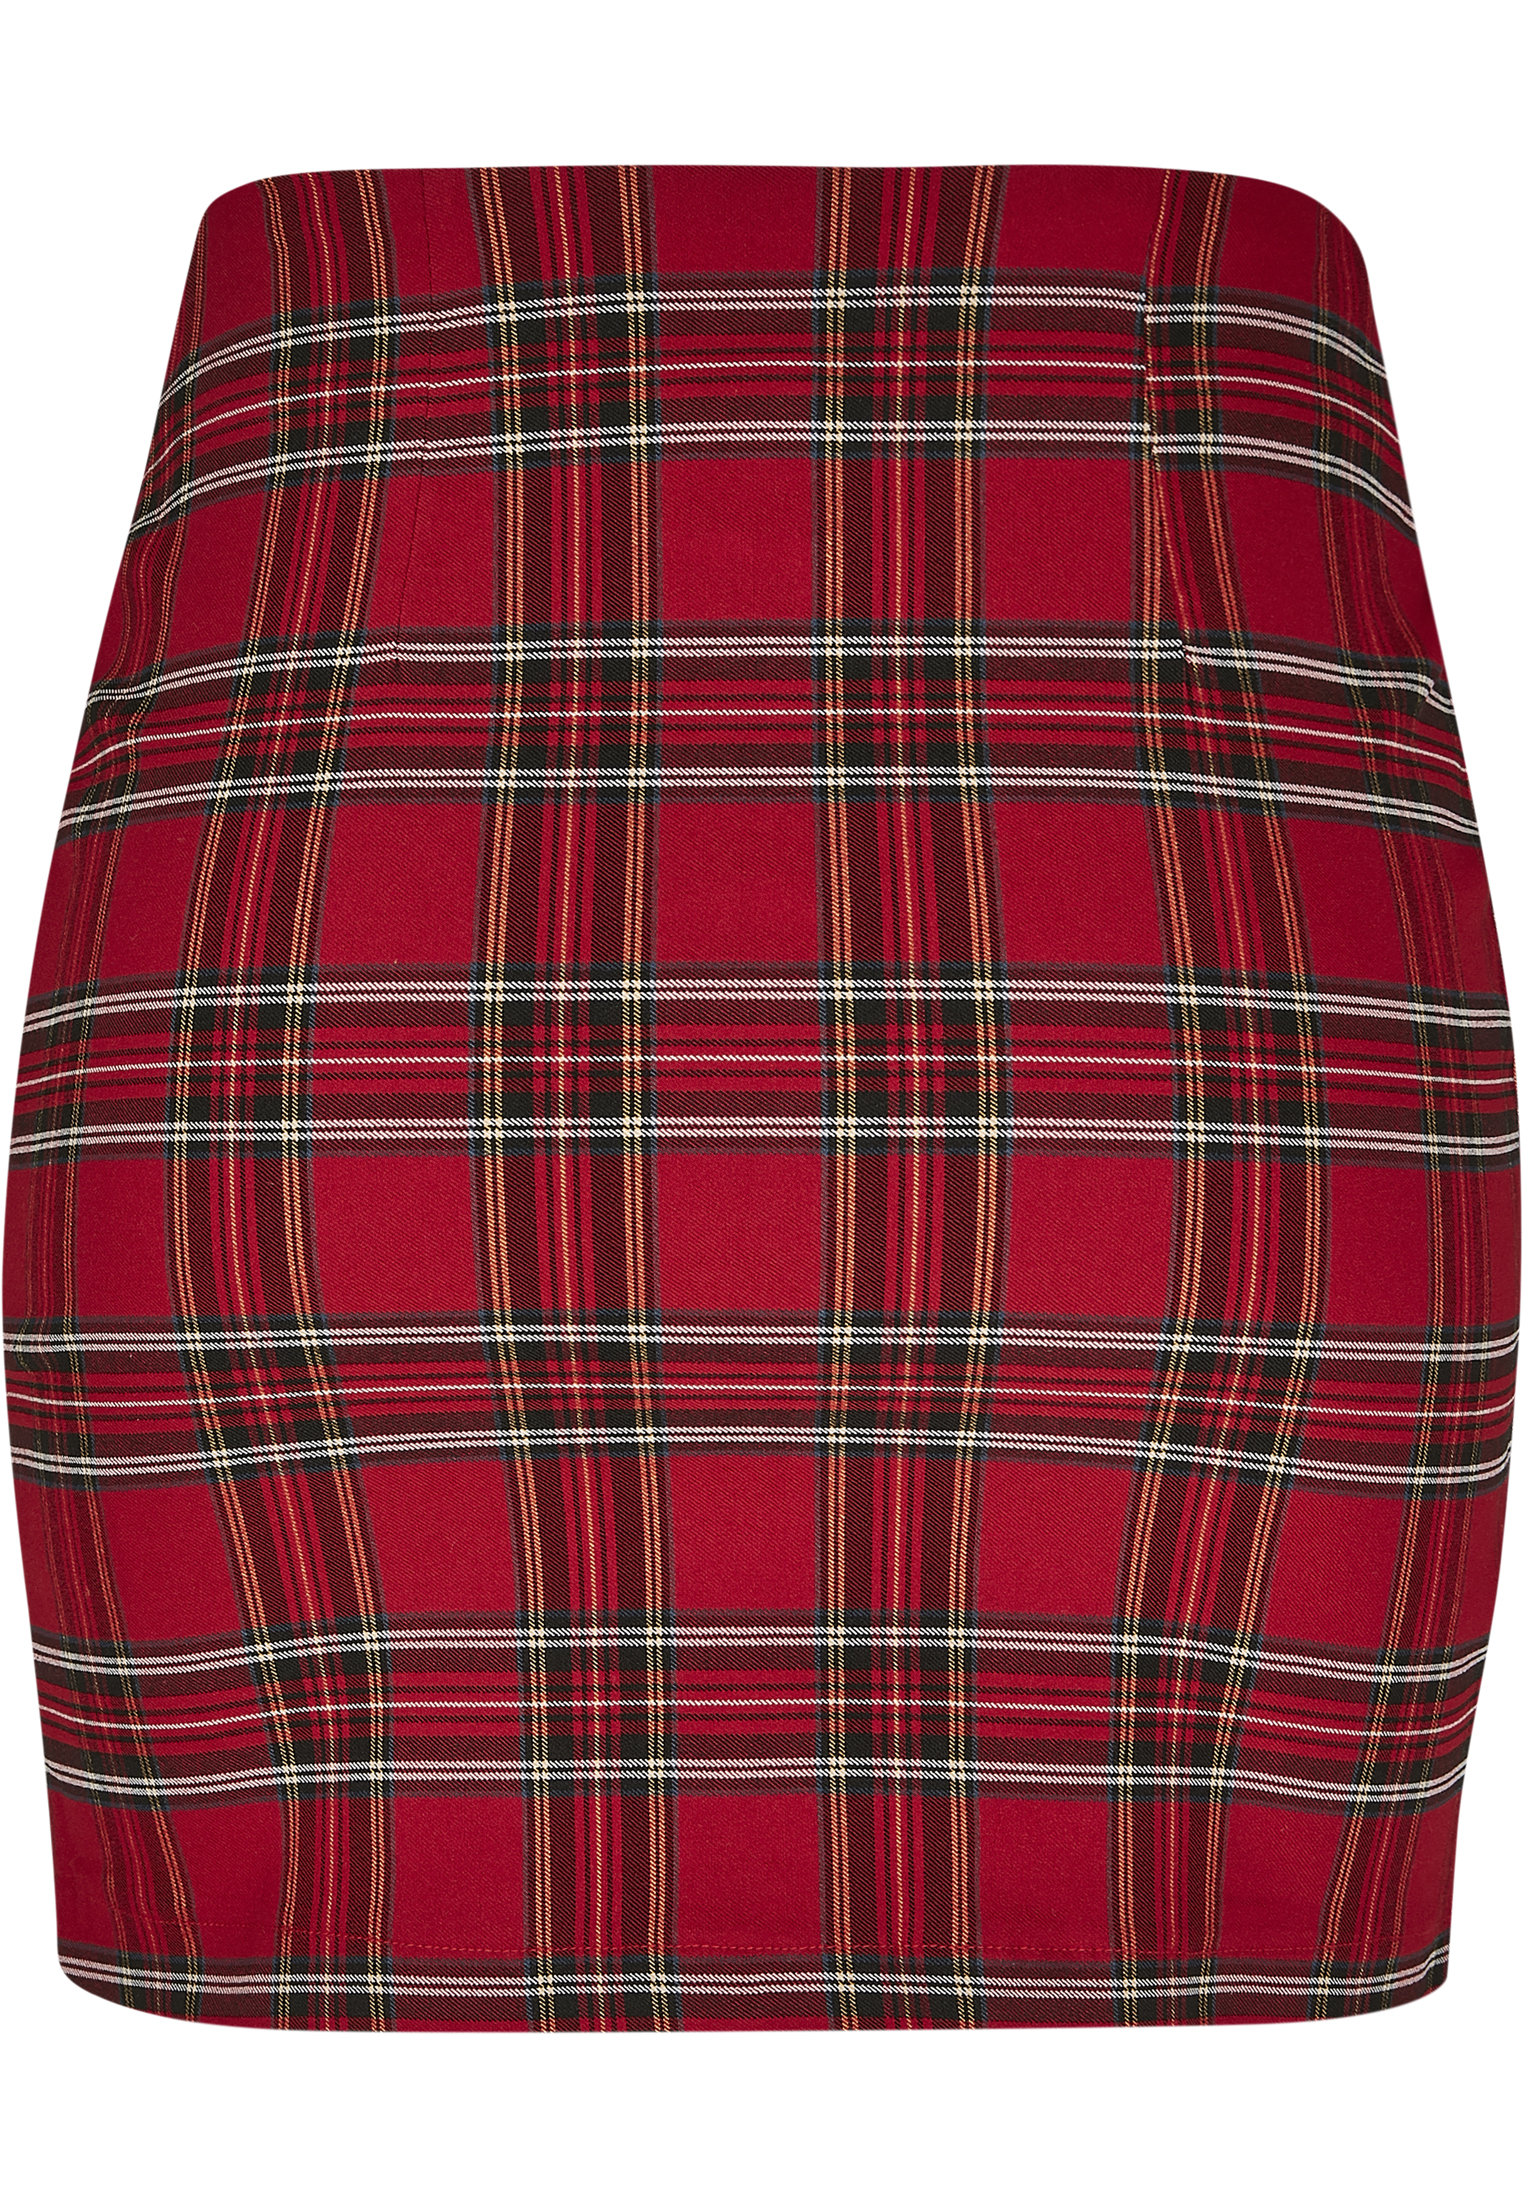 Kleider & R?cke Ladies Short Checker Skirt in Farbe red/blk